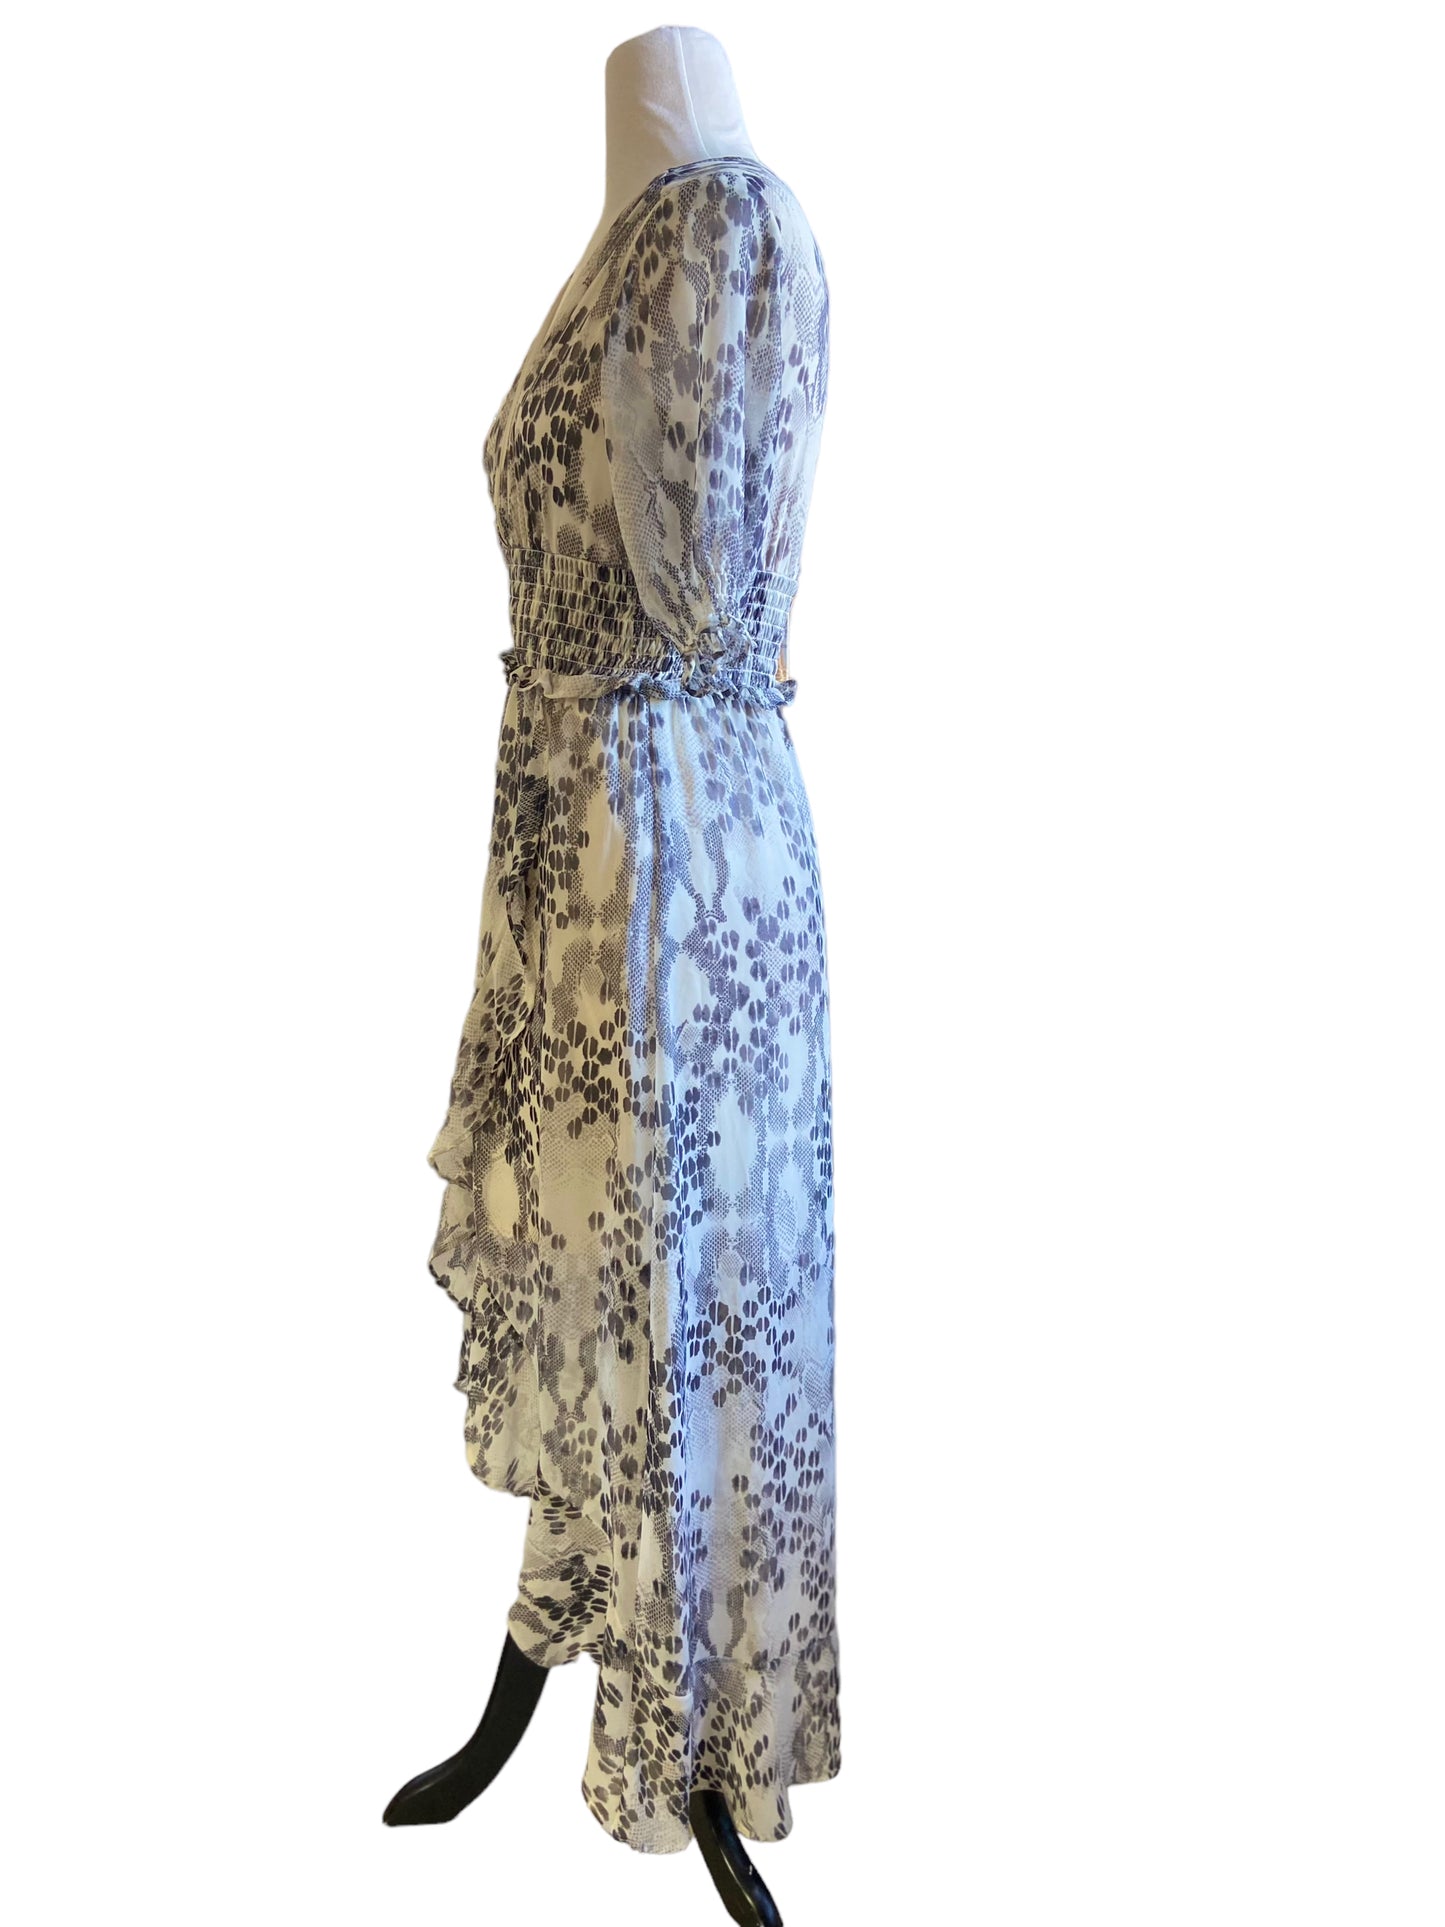 NWT Express Snakeskin Print Dress (Size XS)